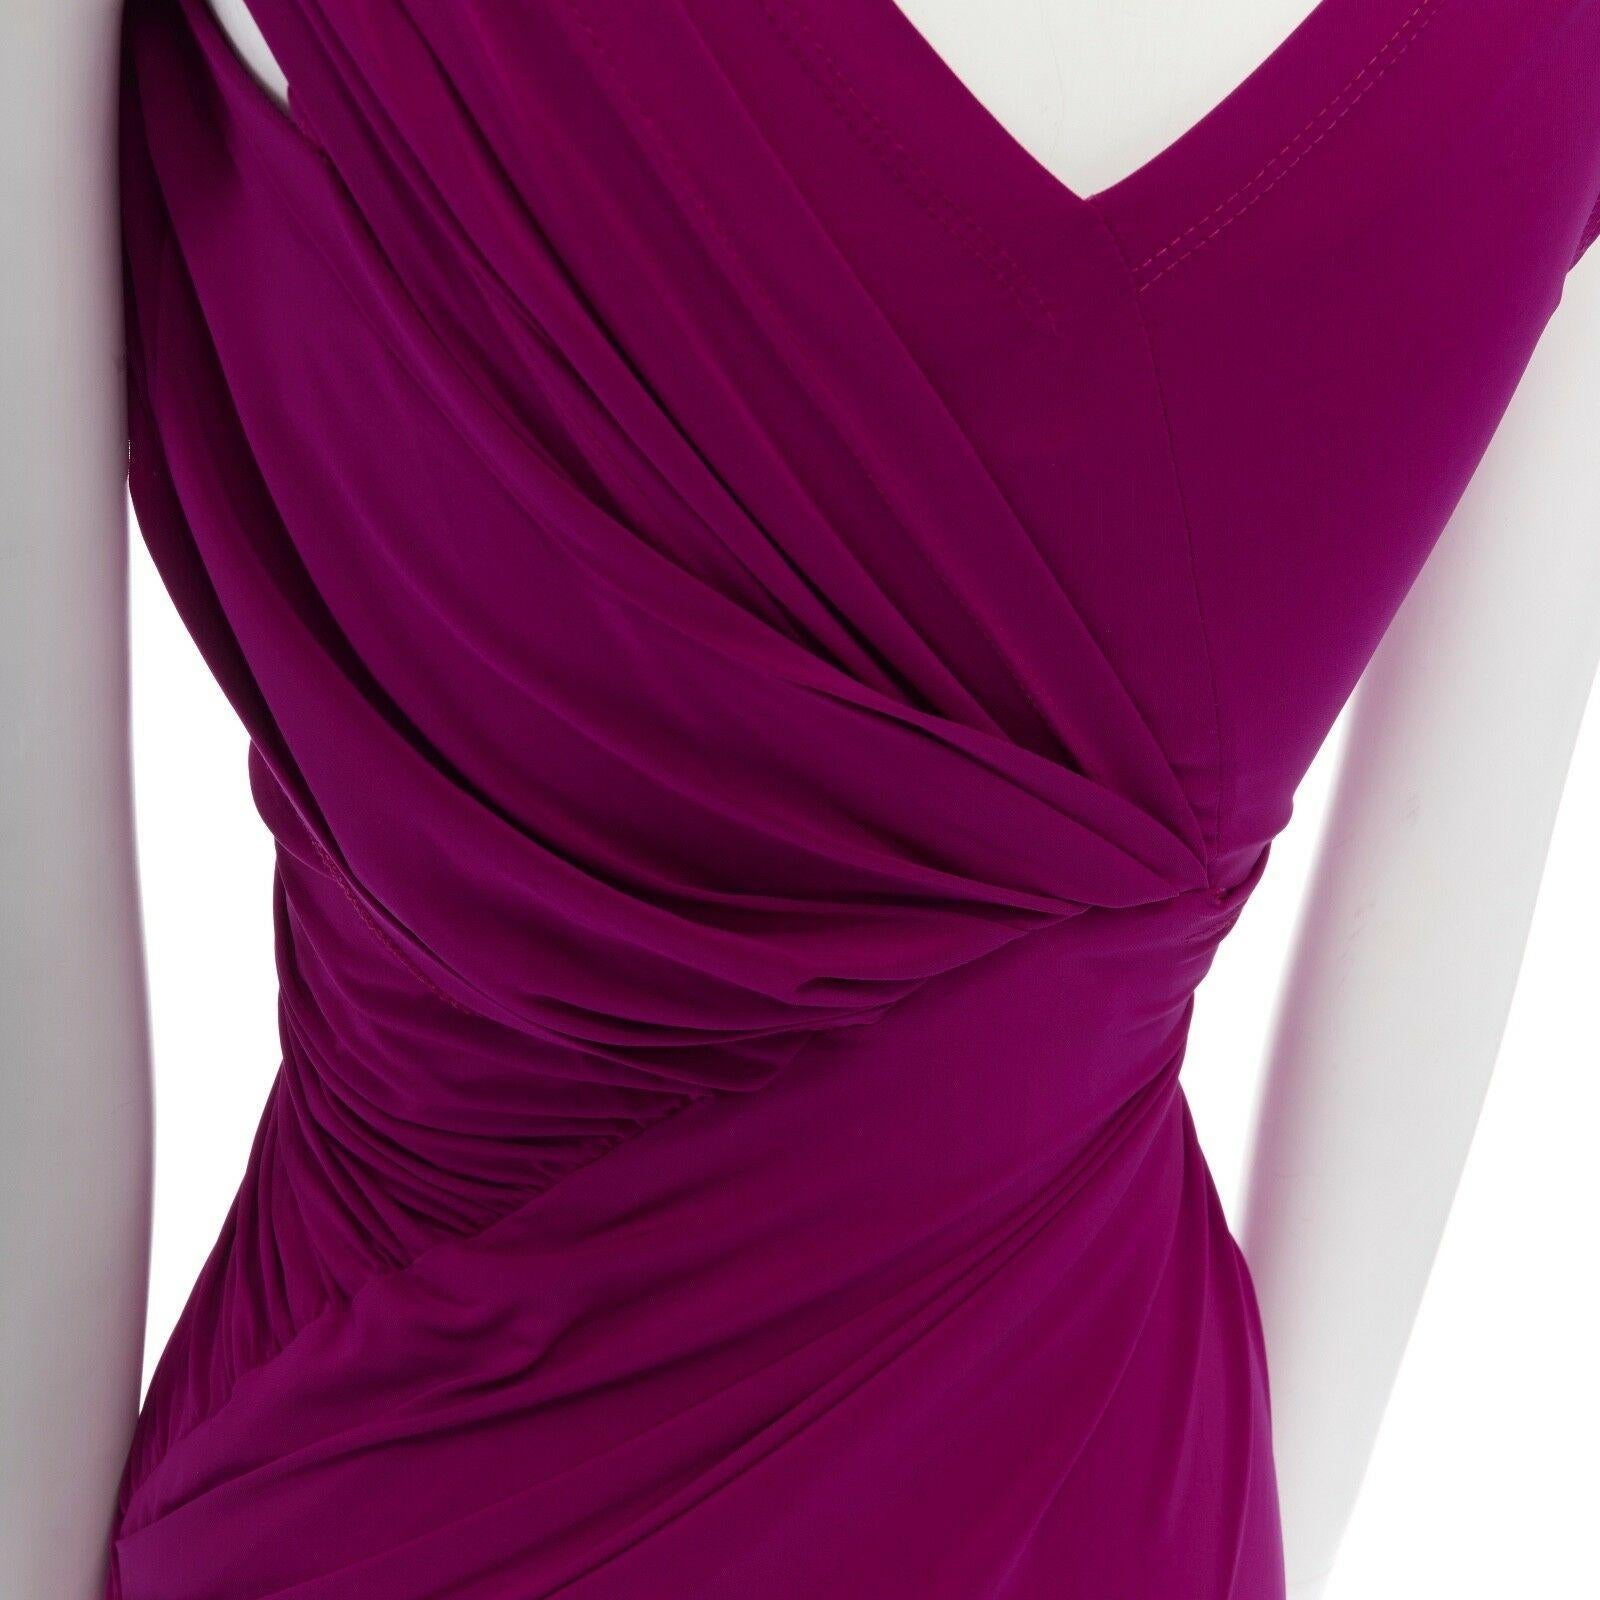 DONNA KARAN fuscia pink viscose wrapped draped bodycon evening gown dress XS 4